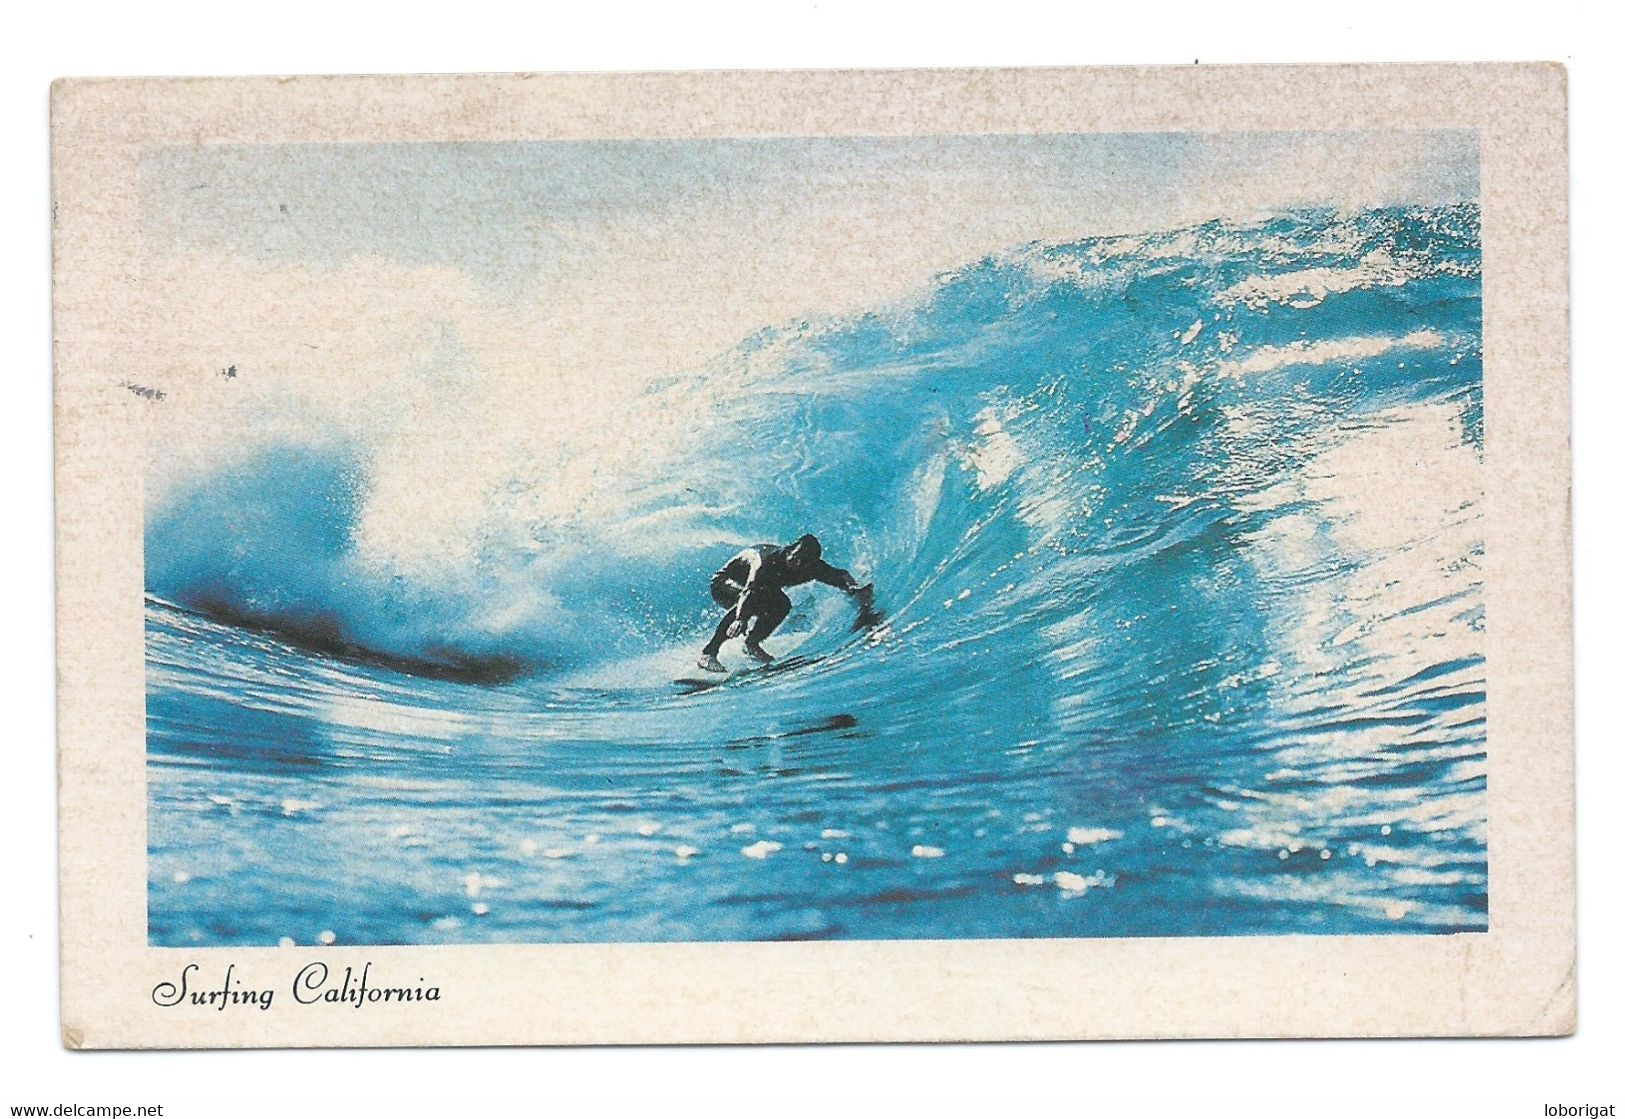 SURFING CALIFORNIA.- CALIFORNIA.- ( U.S.A. ) - Water-skiing